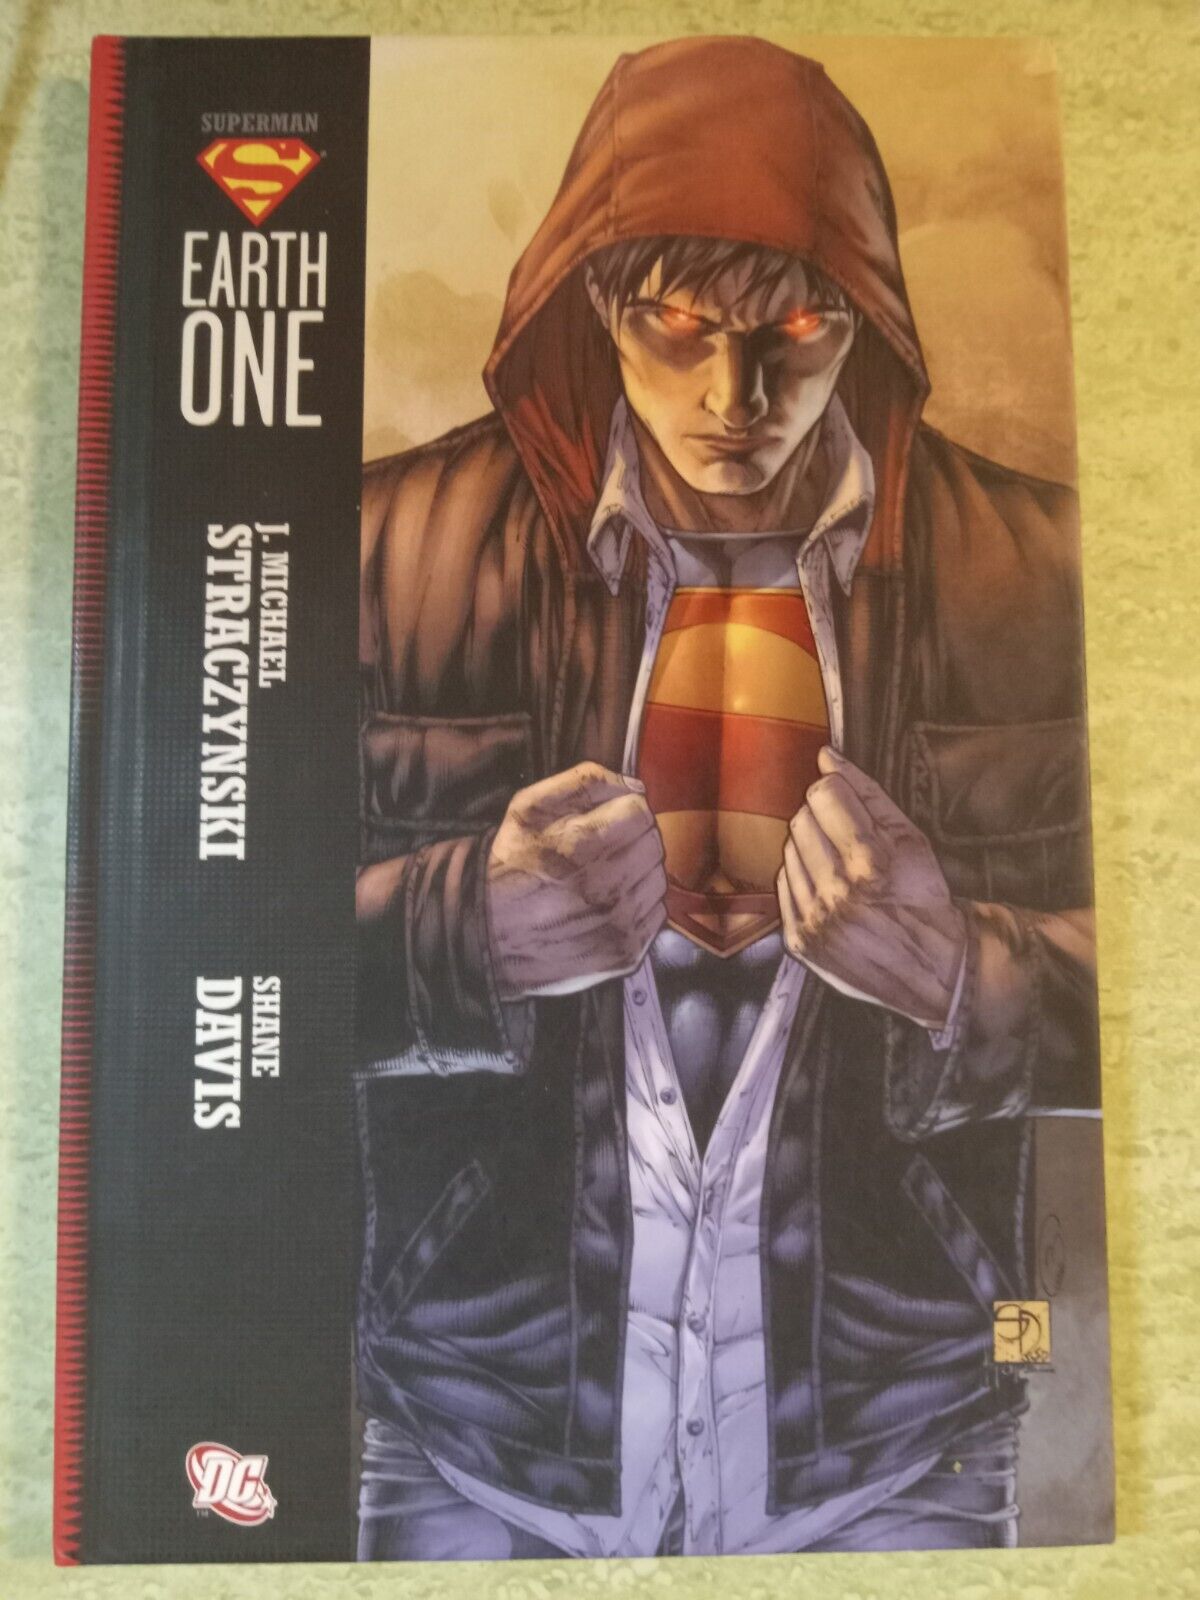 Superman: Earth One #1 (DC Comics December 2010)